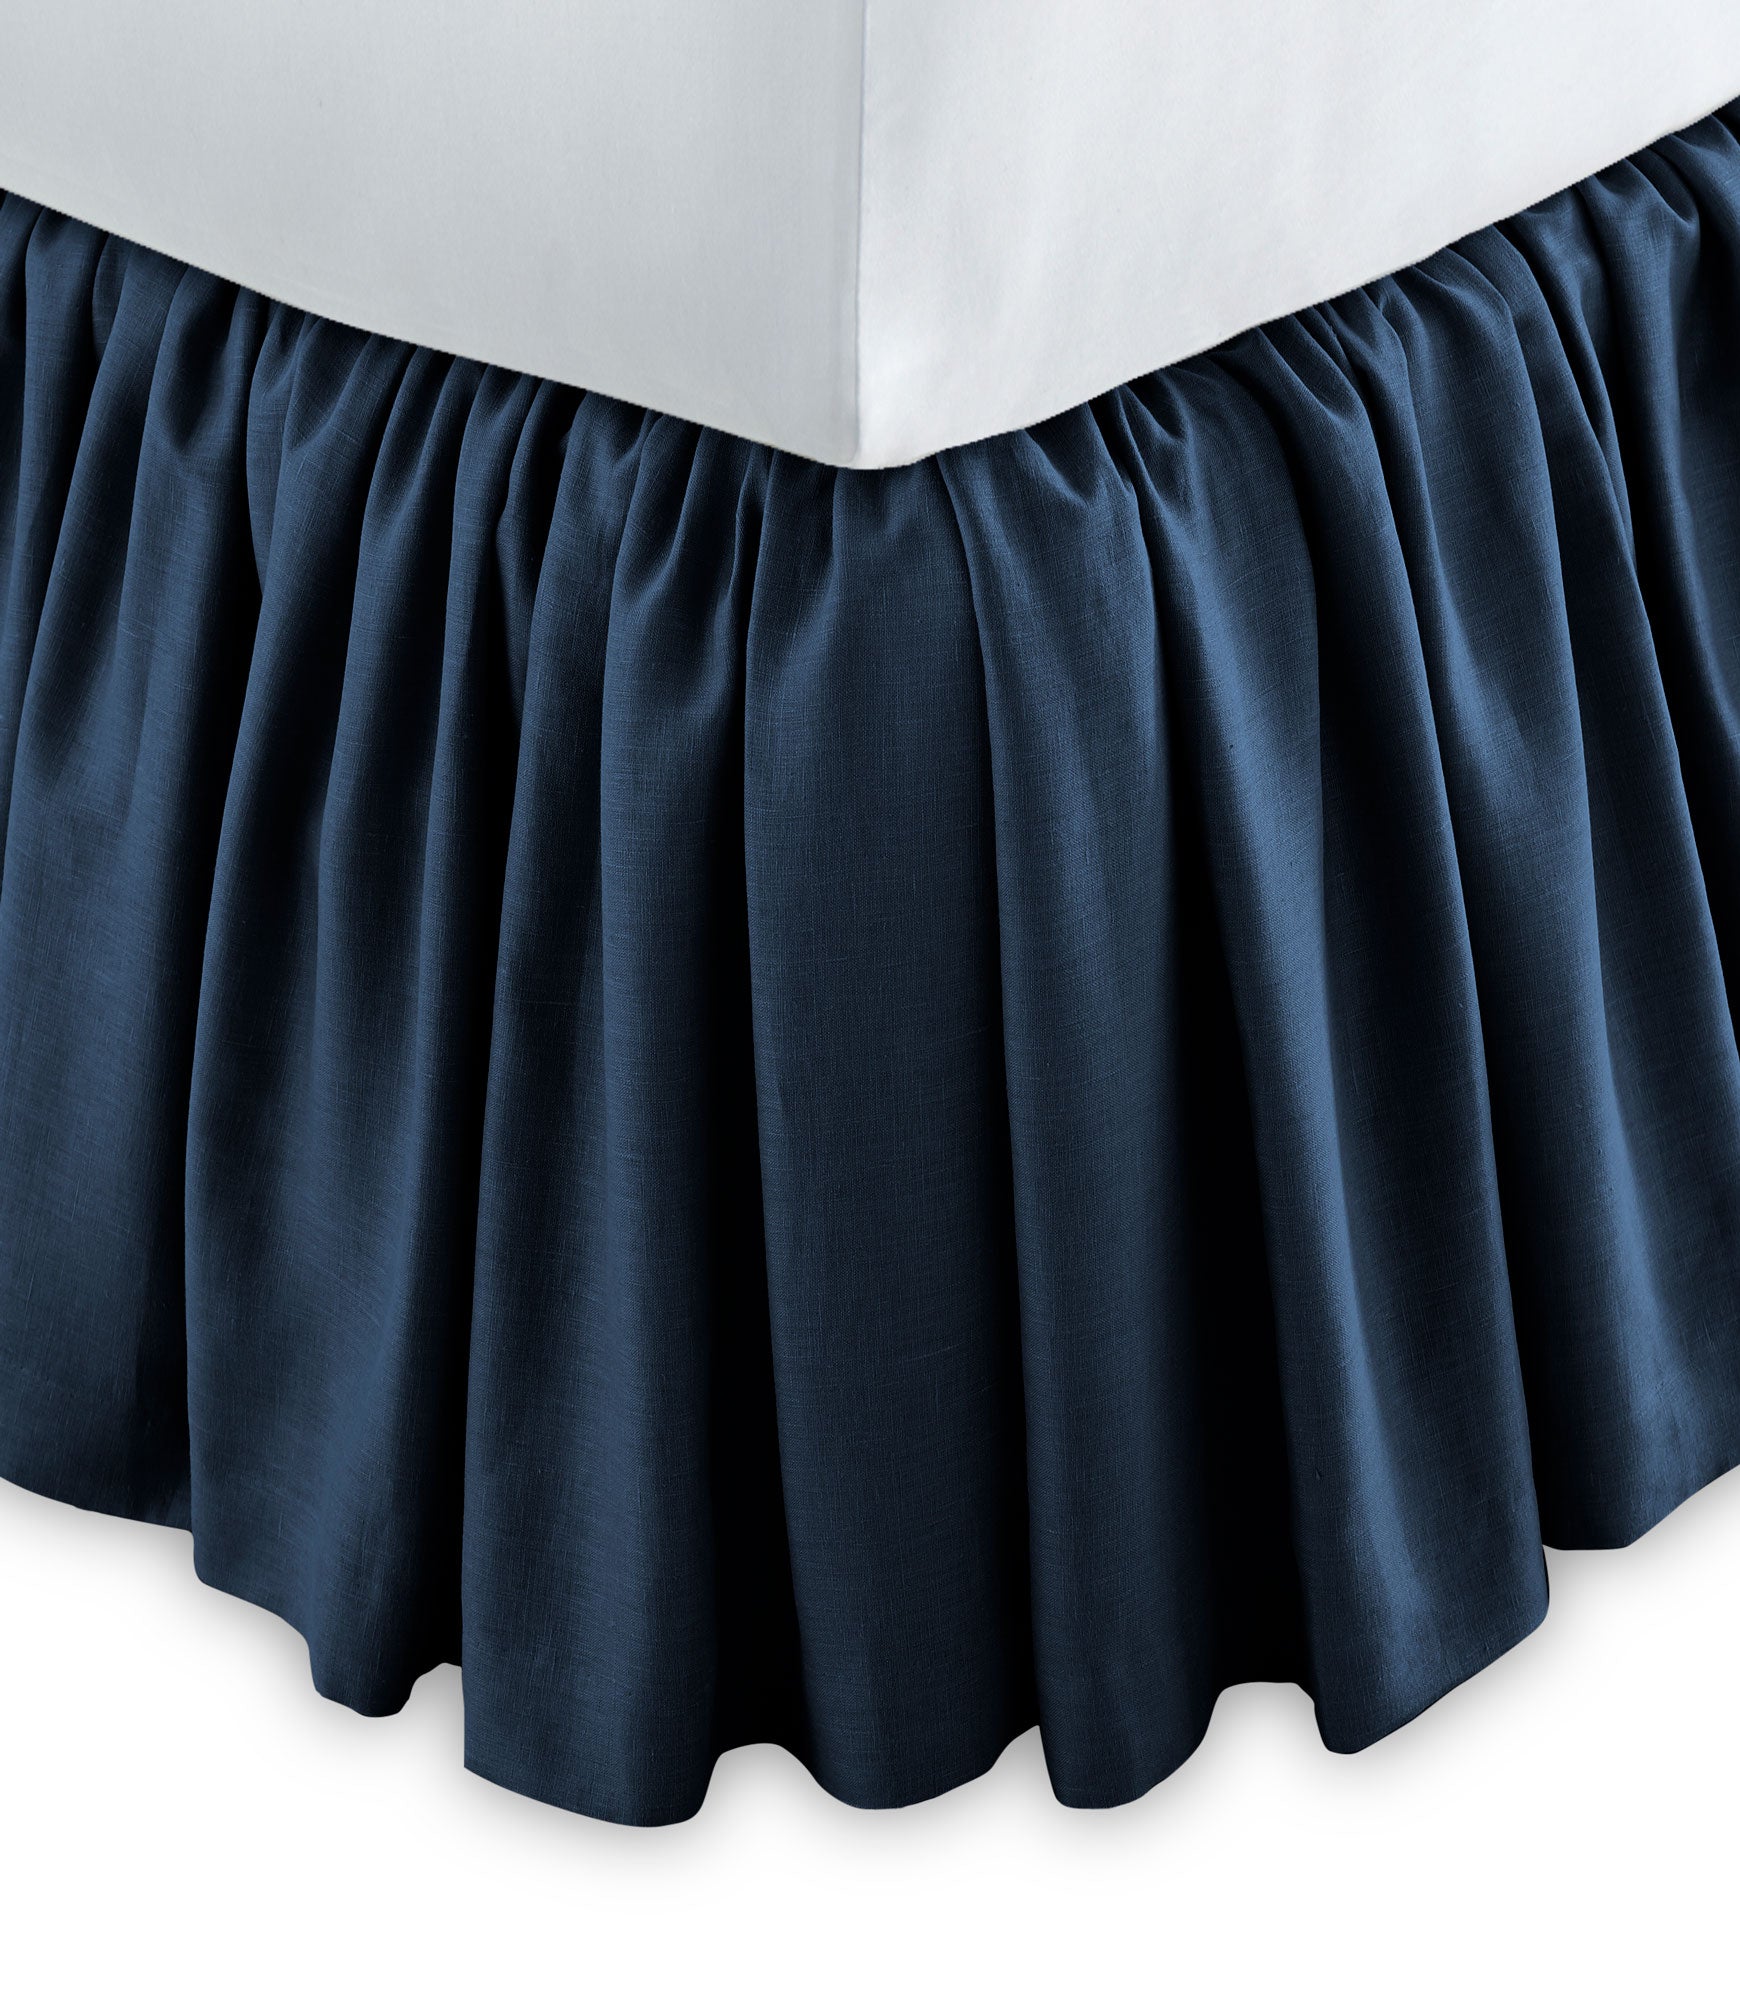 Mandalay Ruffled Linen Bed Skirt Navy